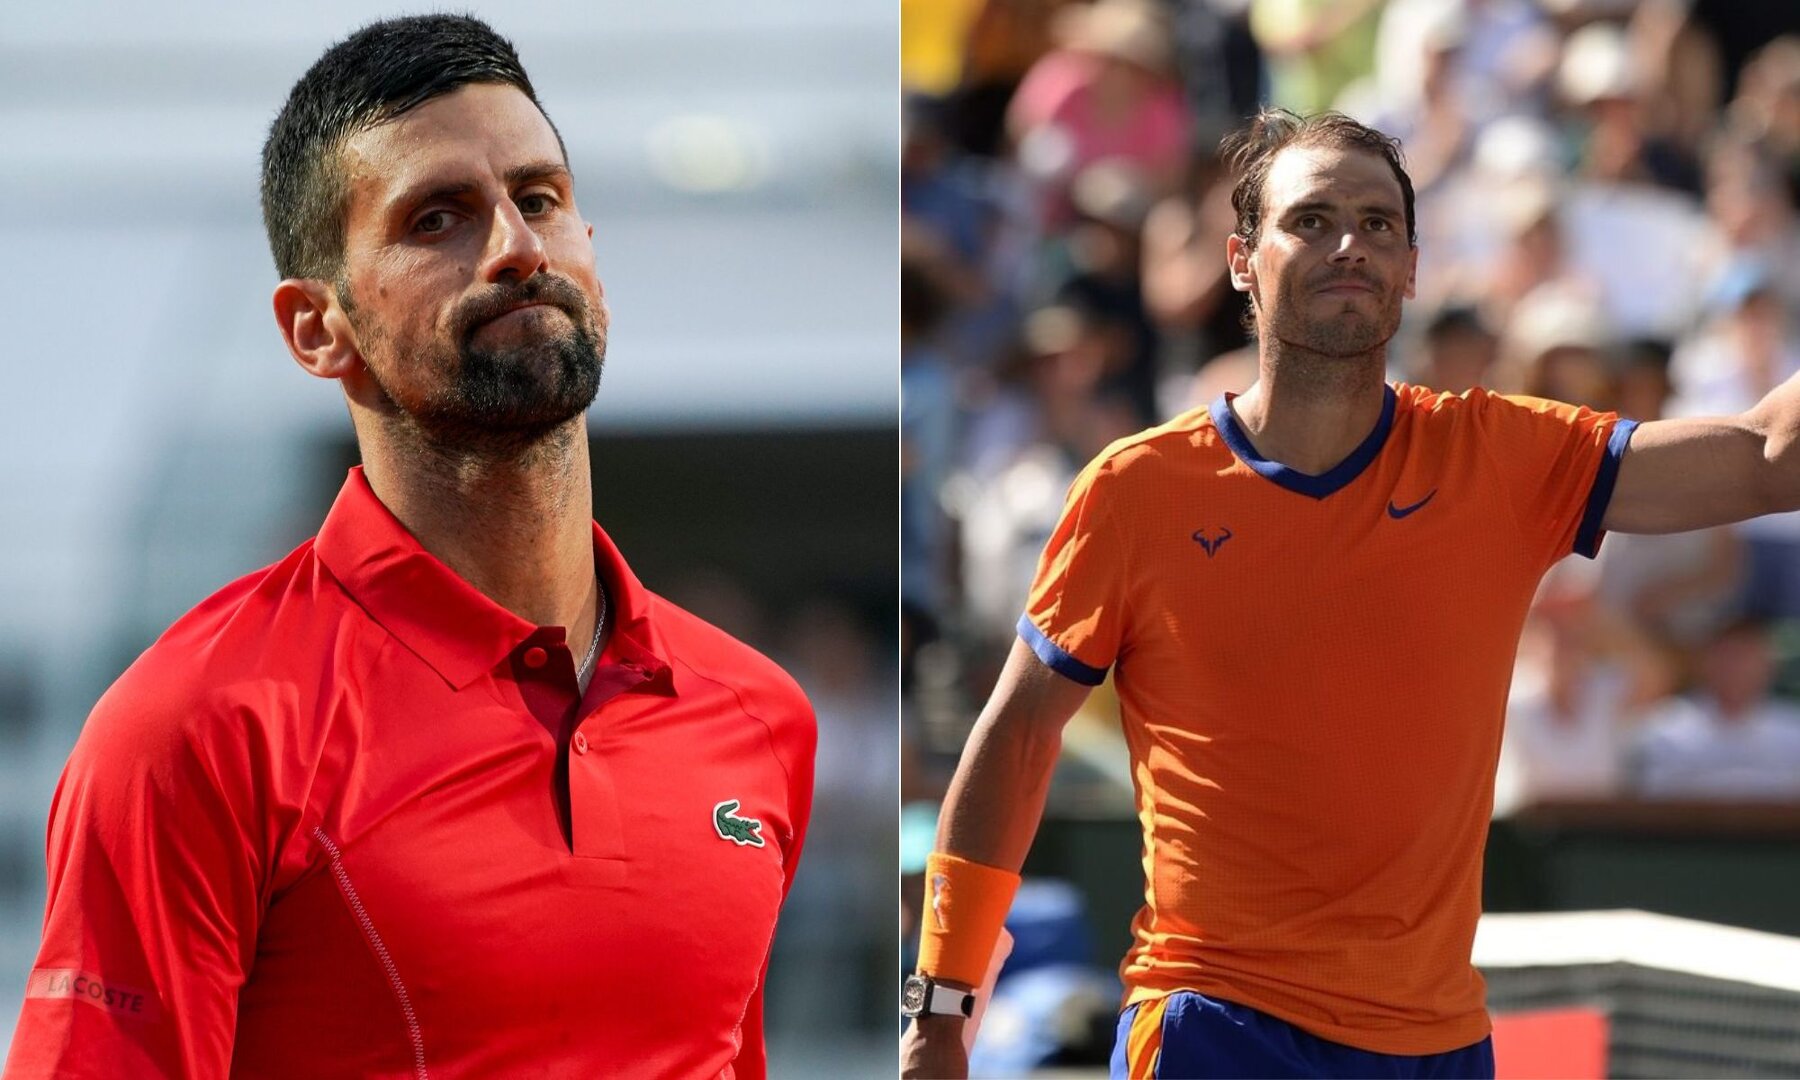 Italian Open quarterfinals to not feature Rafael Nadal or Novak